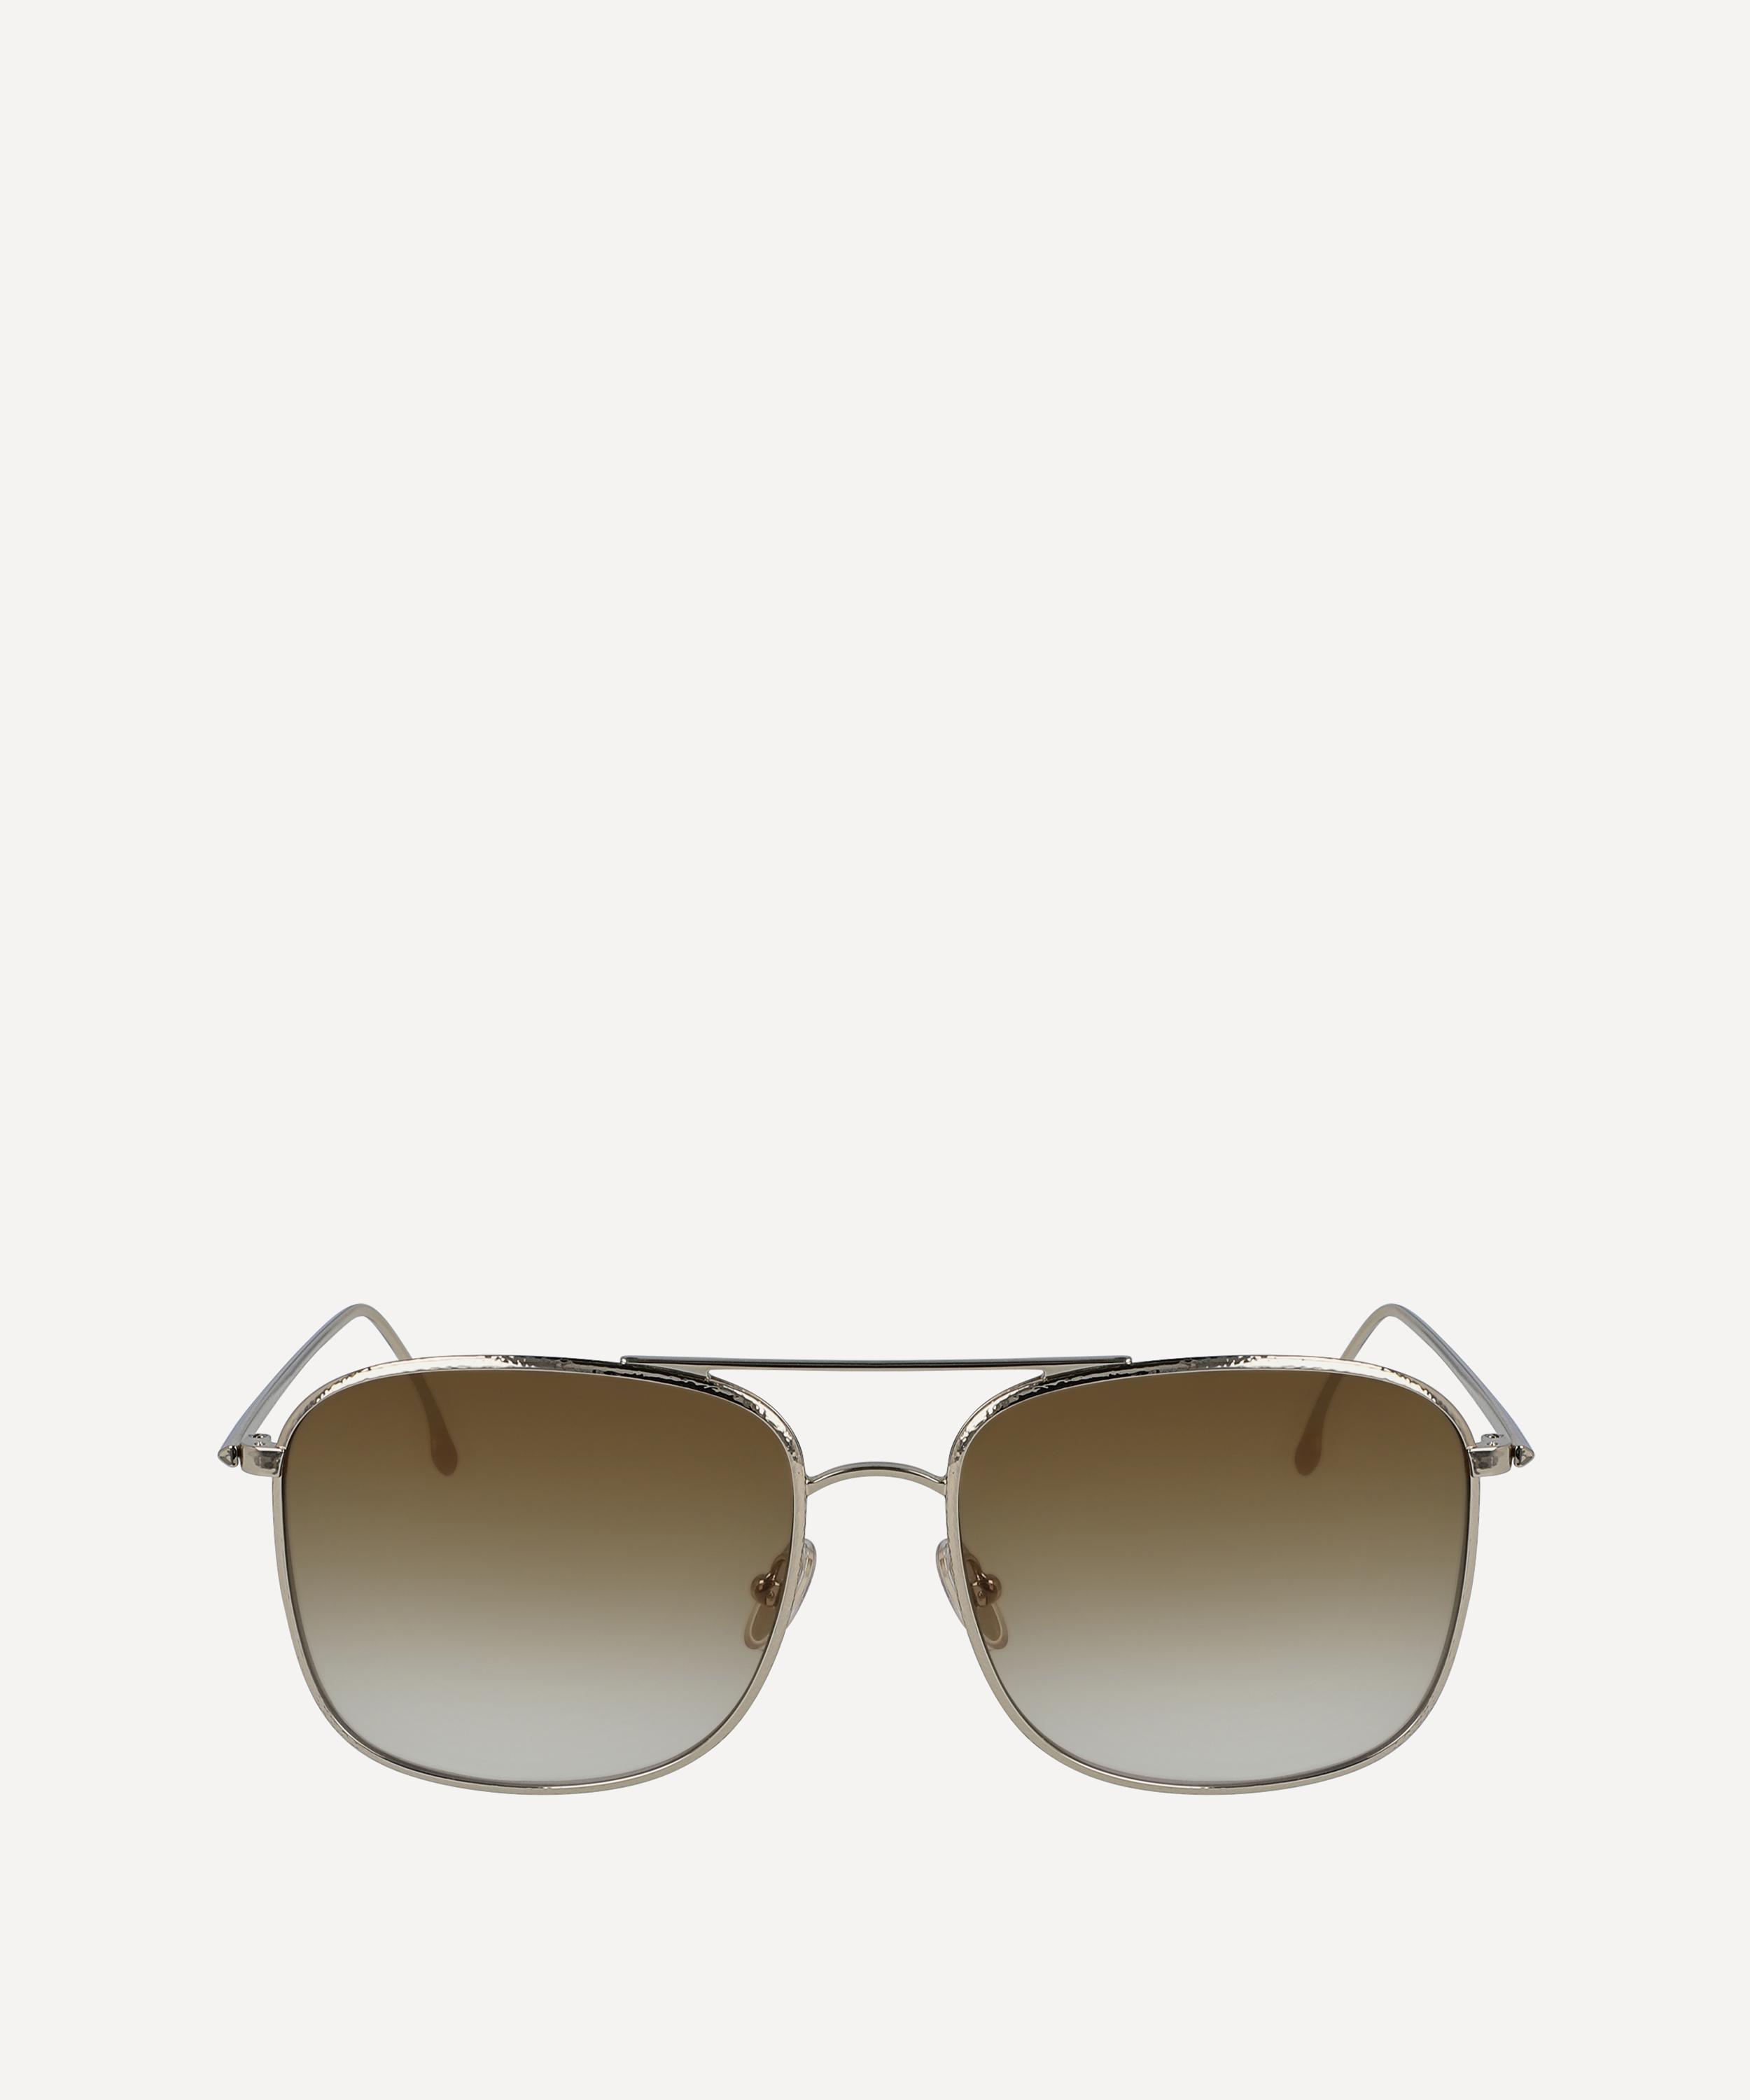 Victoria Beckham Hammered Square Aviator Sunglasses In Gold-tone